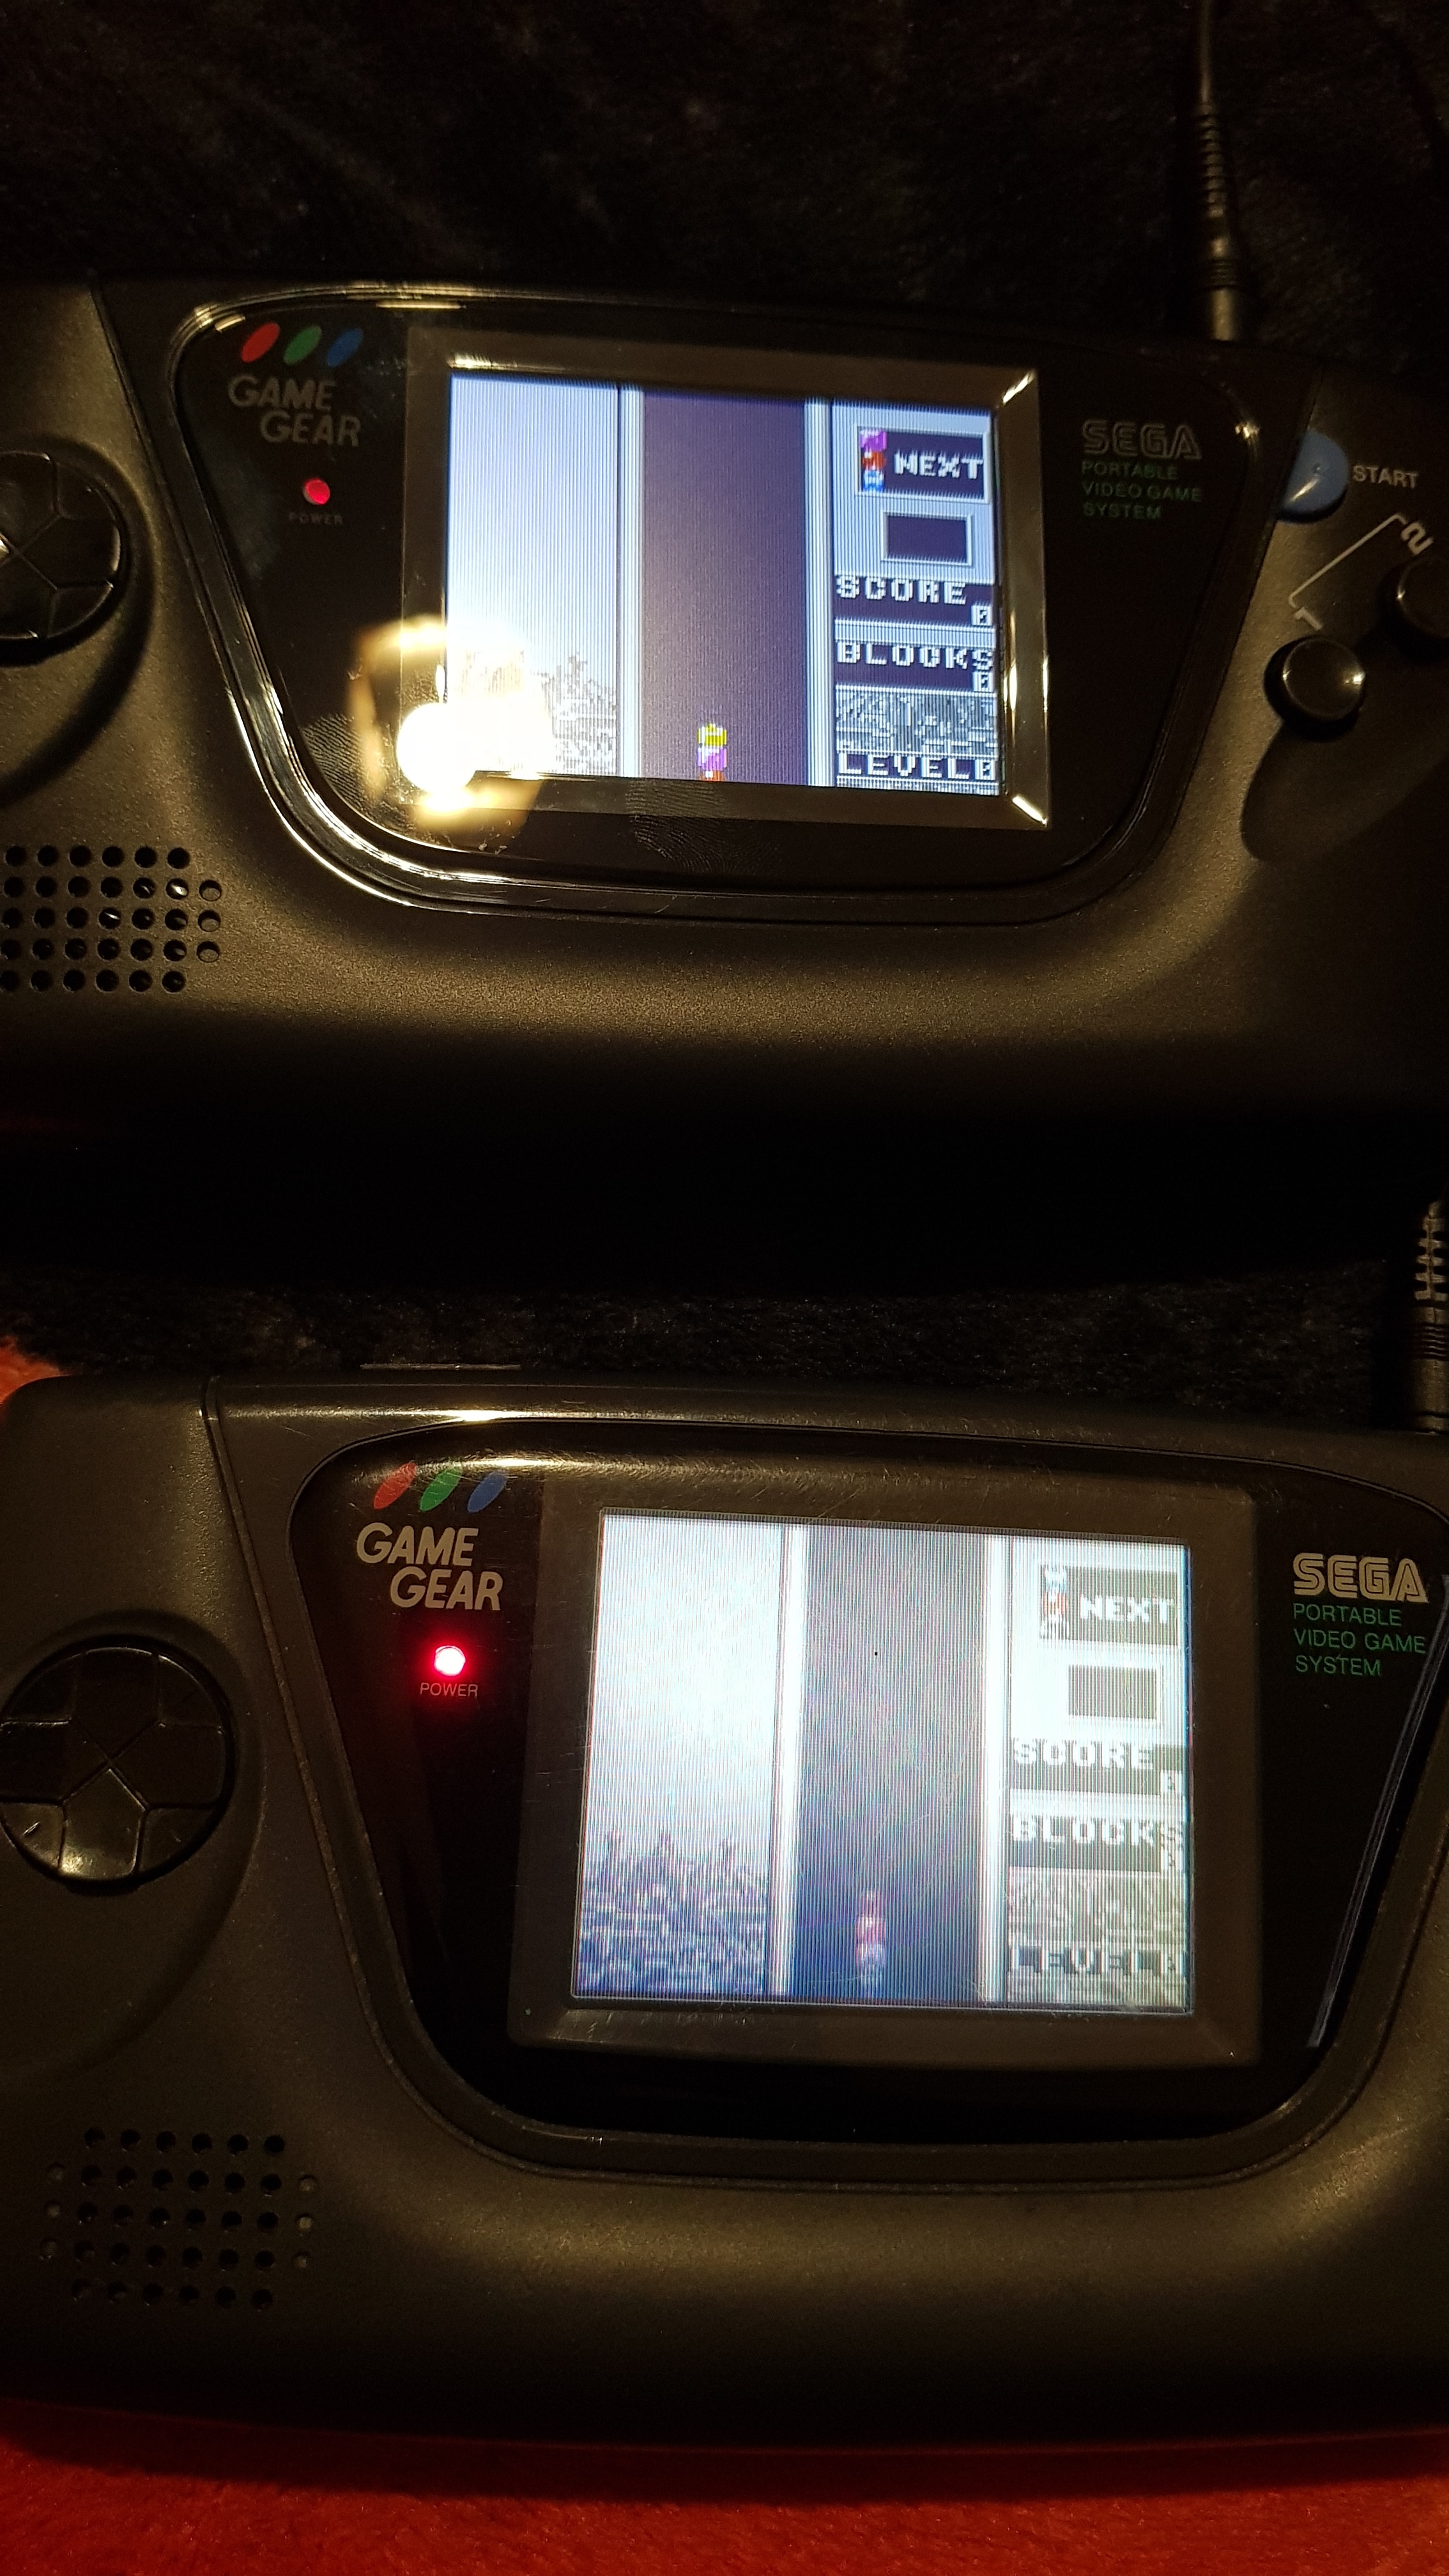 [Rech] Sega game Gear avec ecran LCD Hans